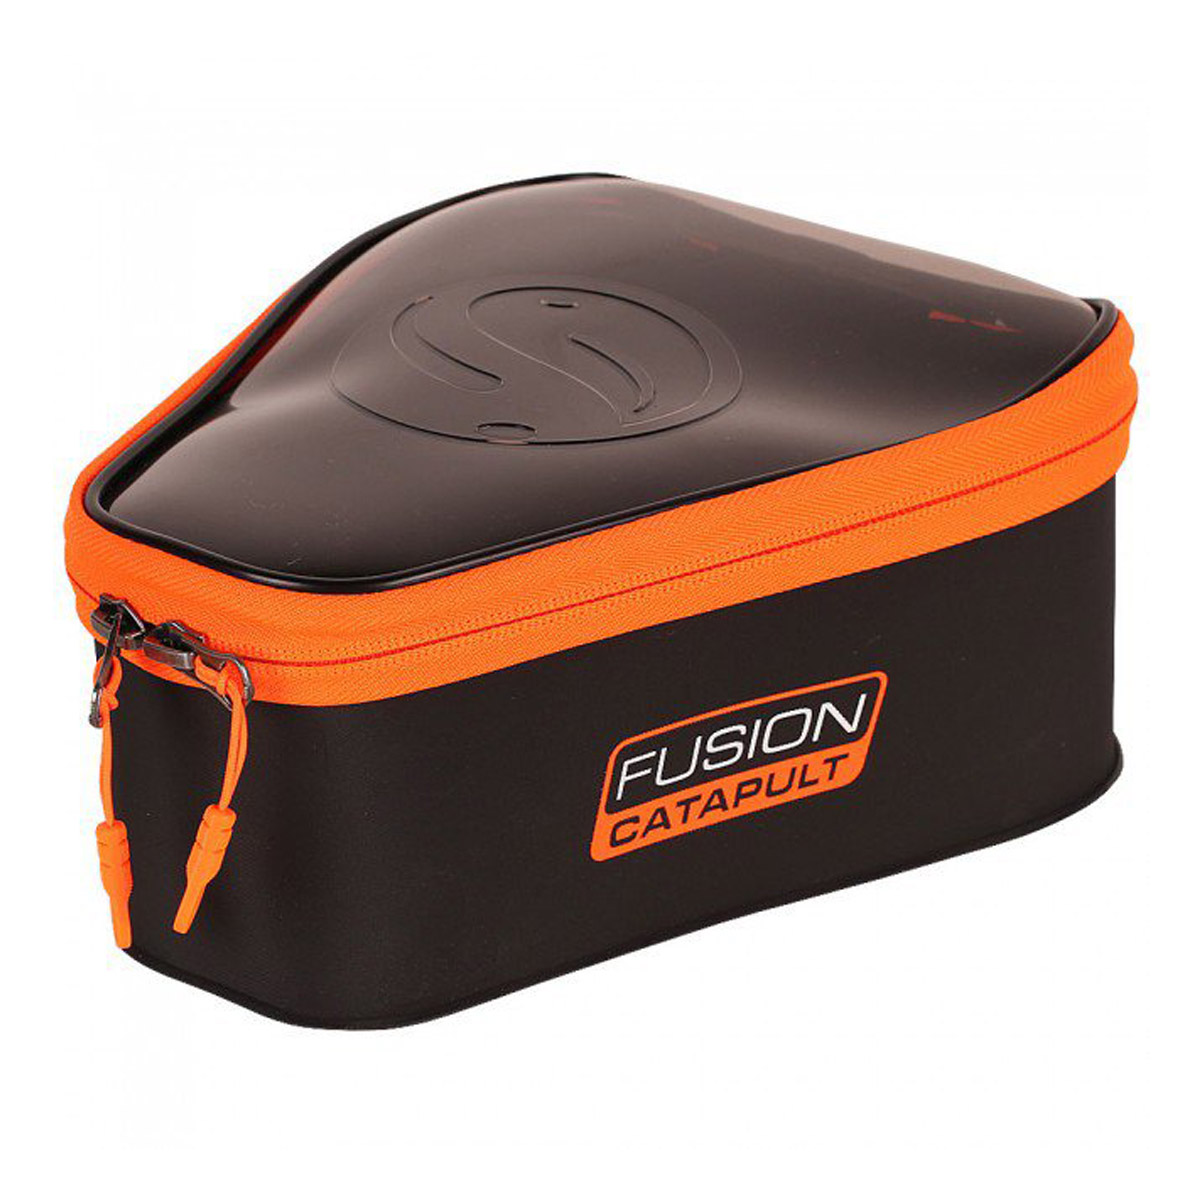 Guru Fusion Catapult Bag Eva Storage System